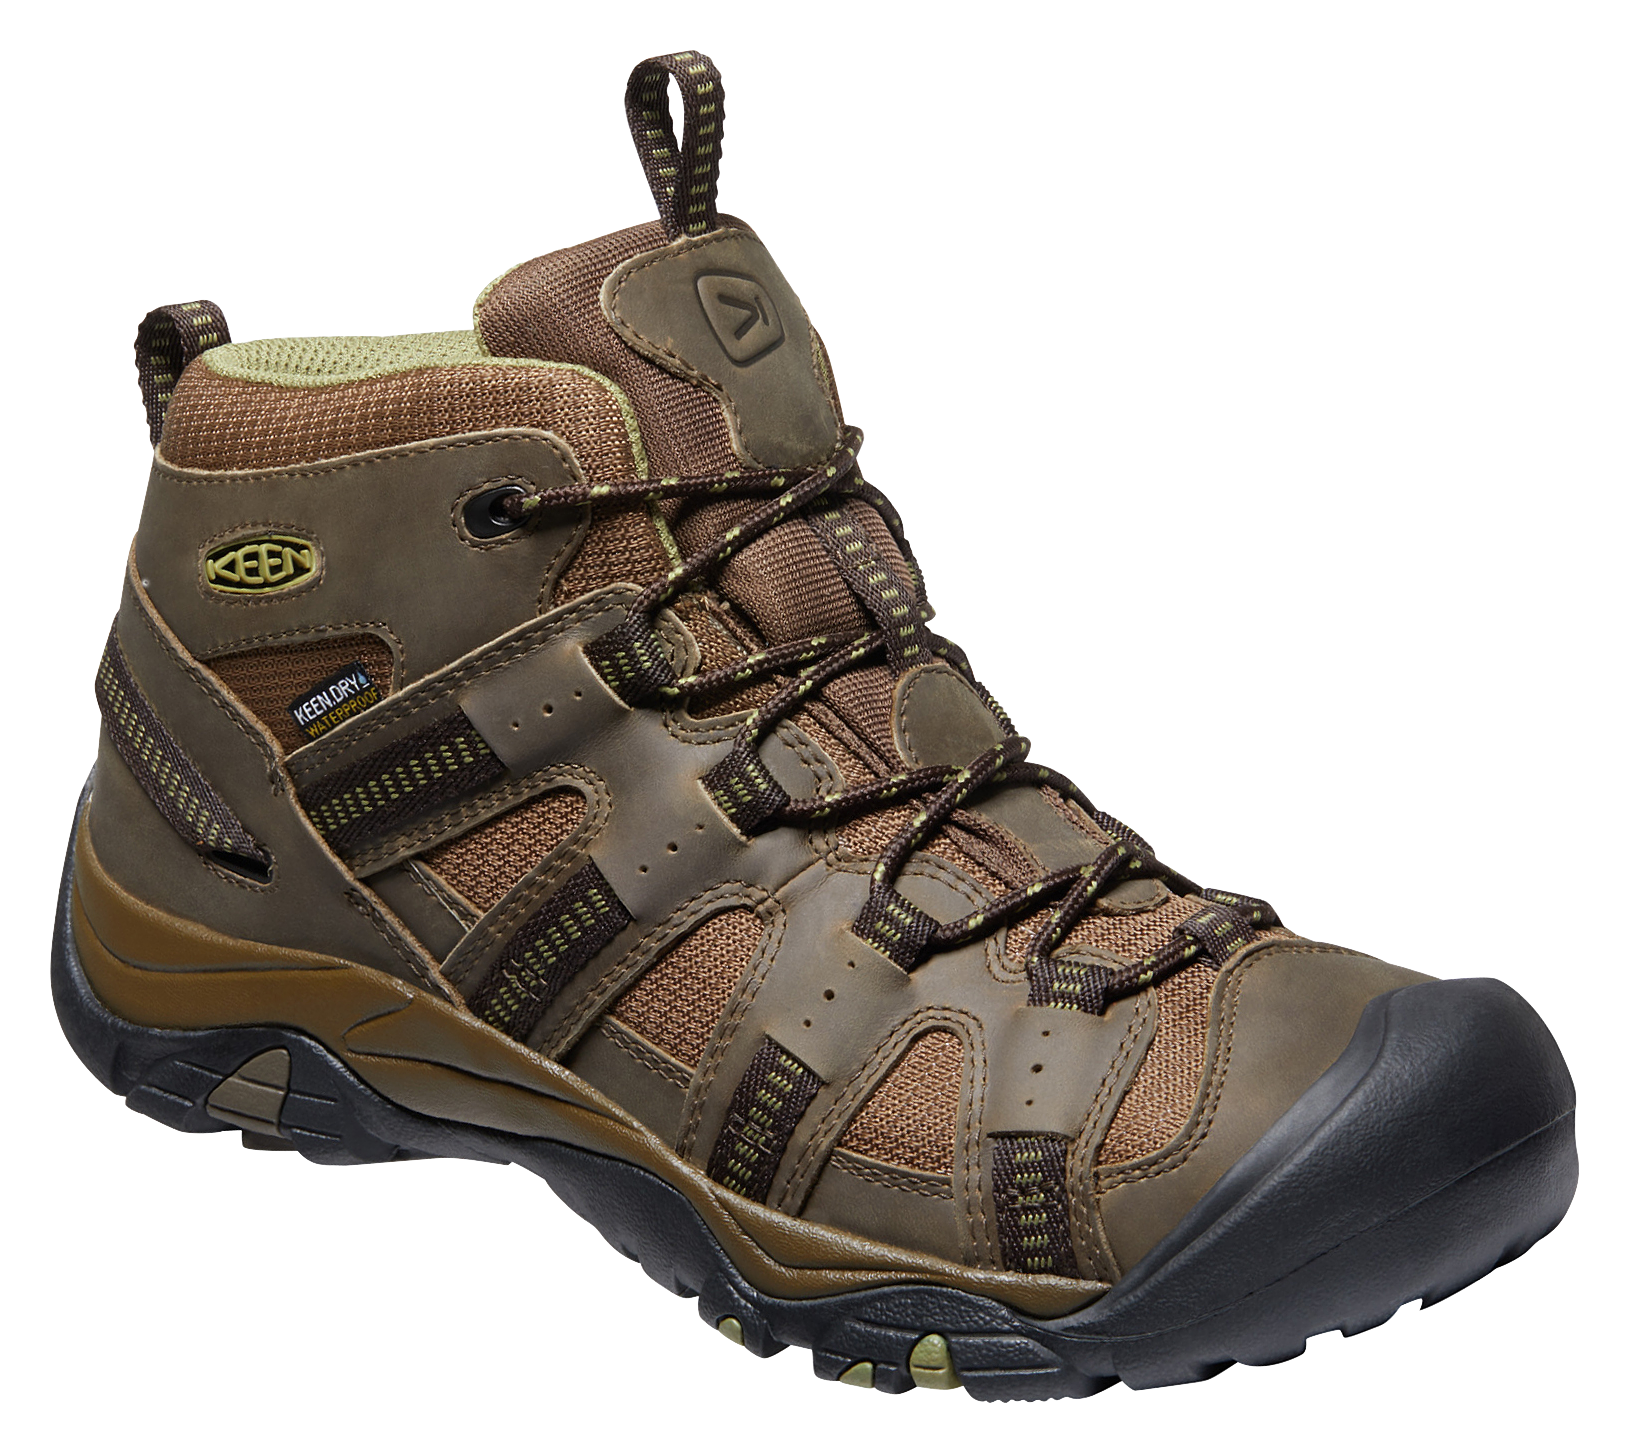 KEEN Siskiyou II Mid Waterproof Hiking Boots for Men - Dark Olive/Olive Drab - 11.5M